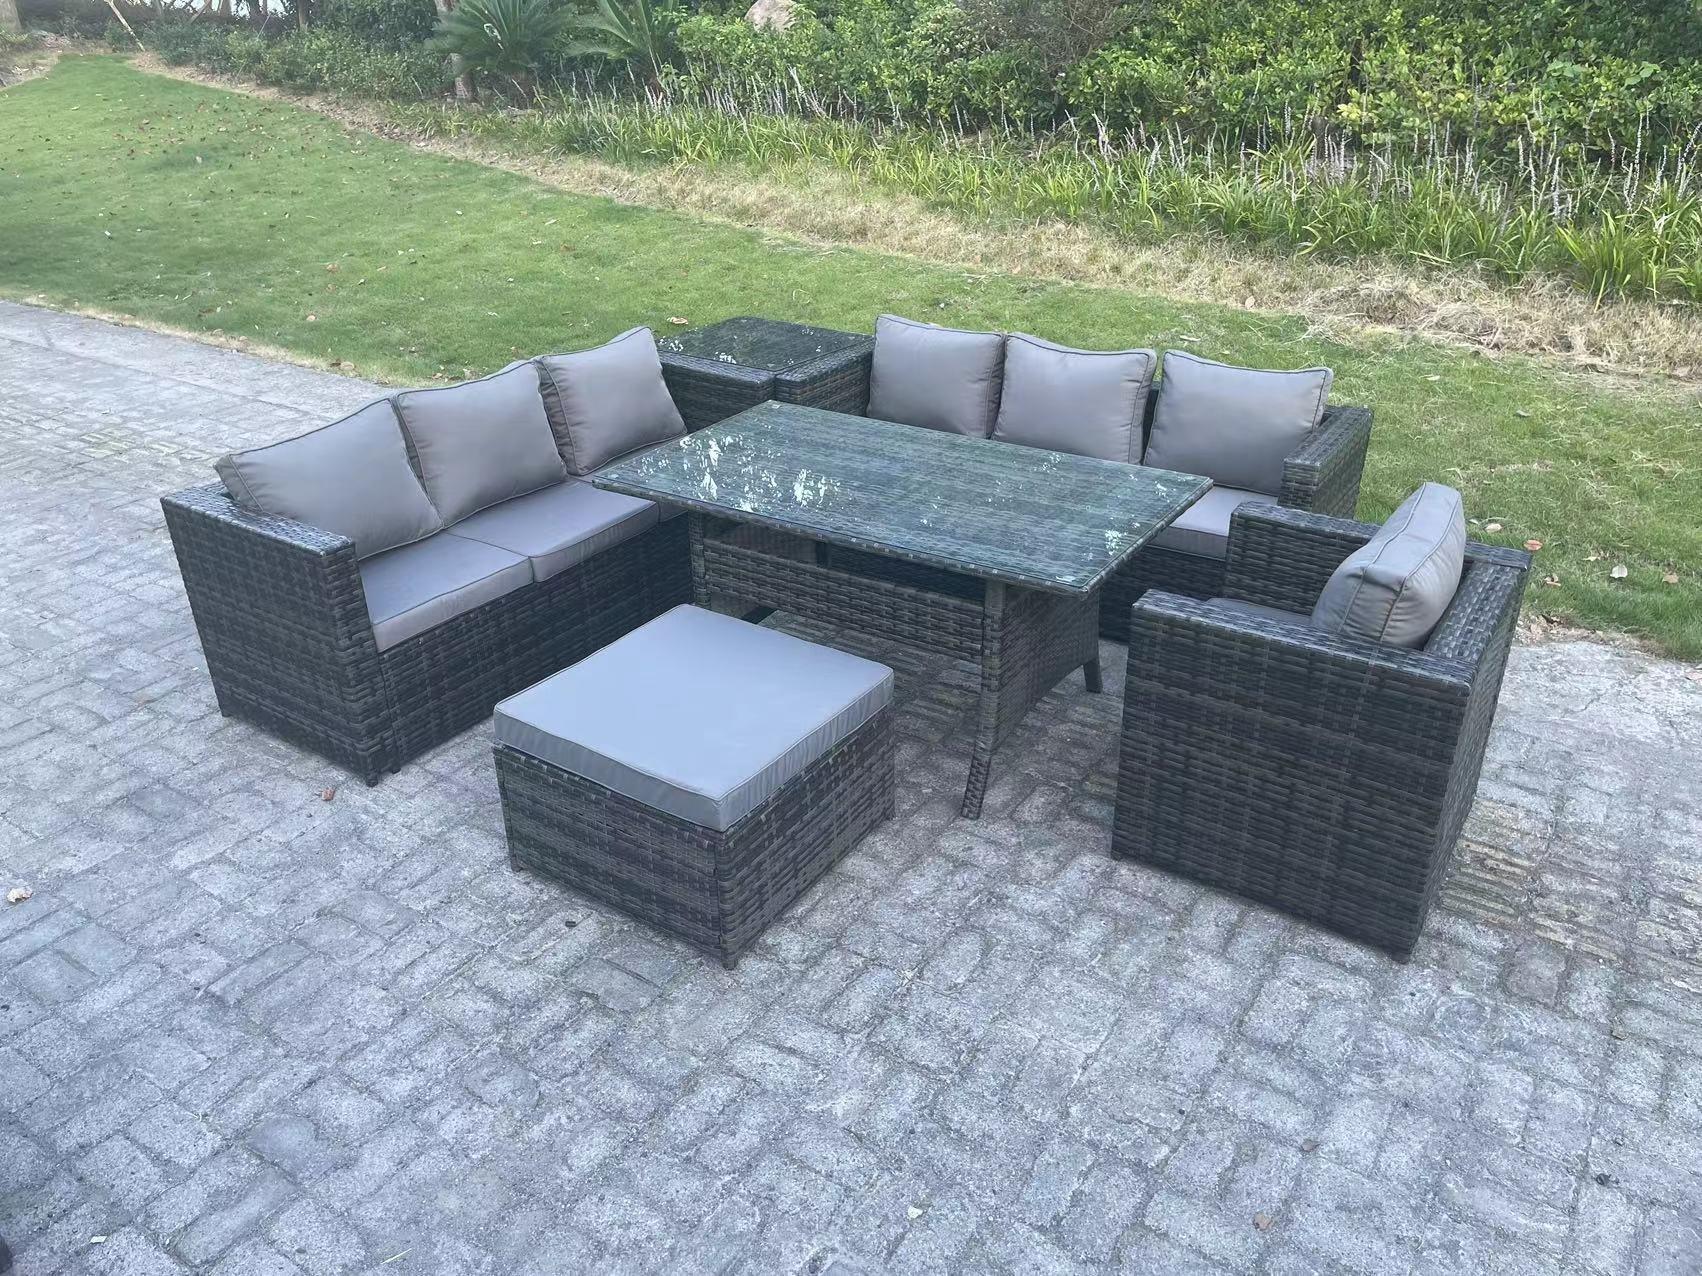 8 Seater Outdoor Lounge Sofa Garden Furniture Set Patio Chair Rattan Rectangular Dining Table